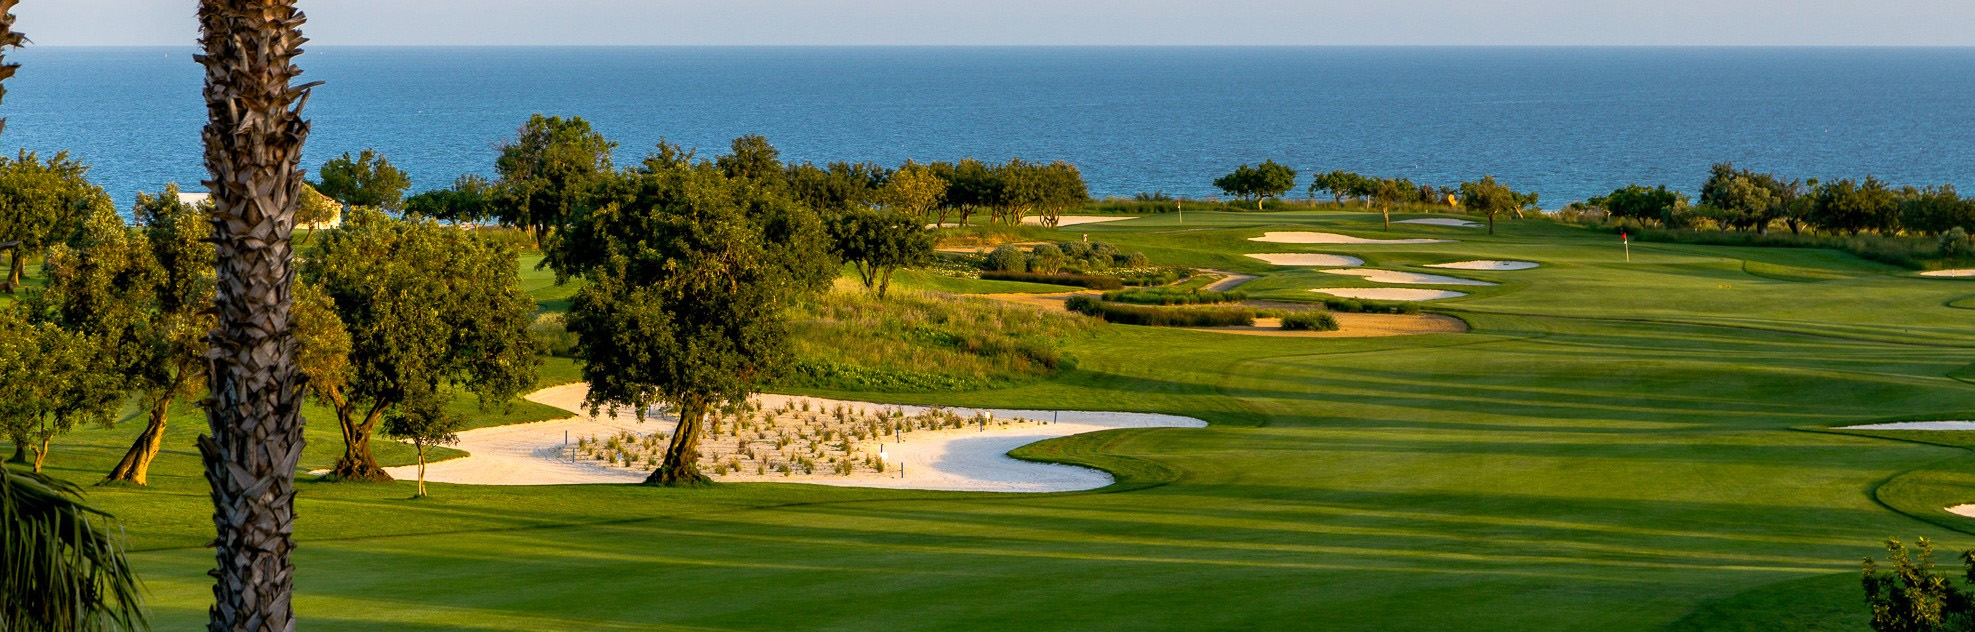 Quinta da Ria golf course, near Tavira, Portugal